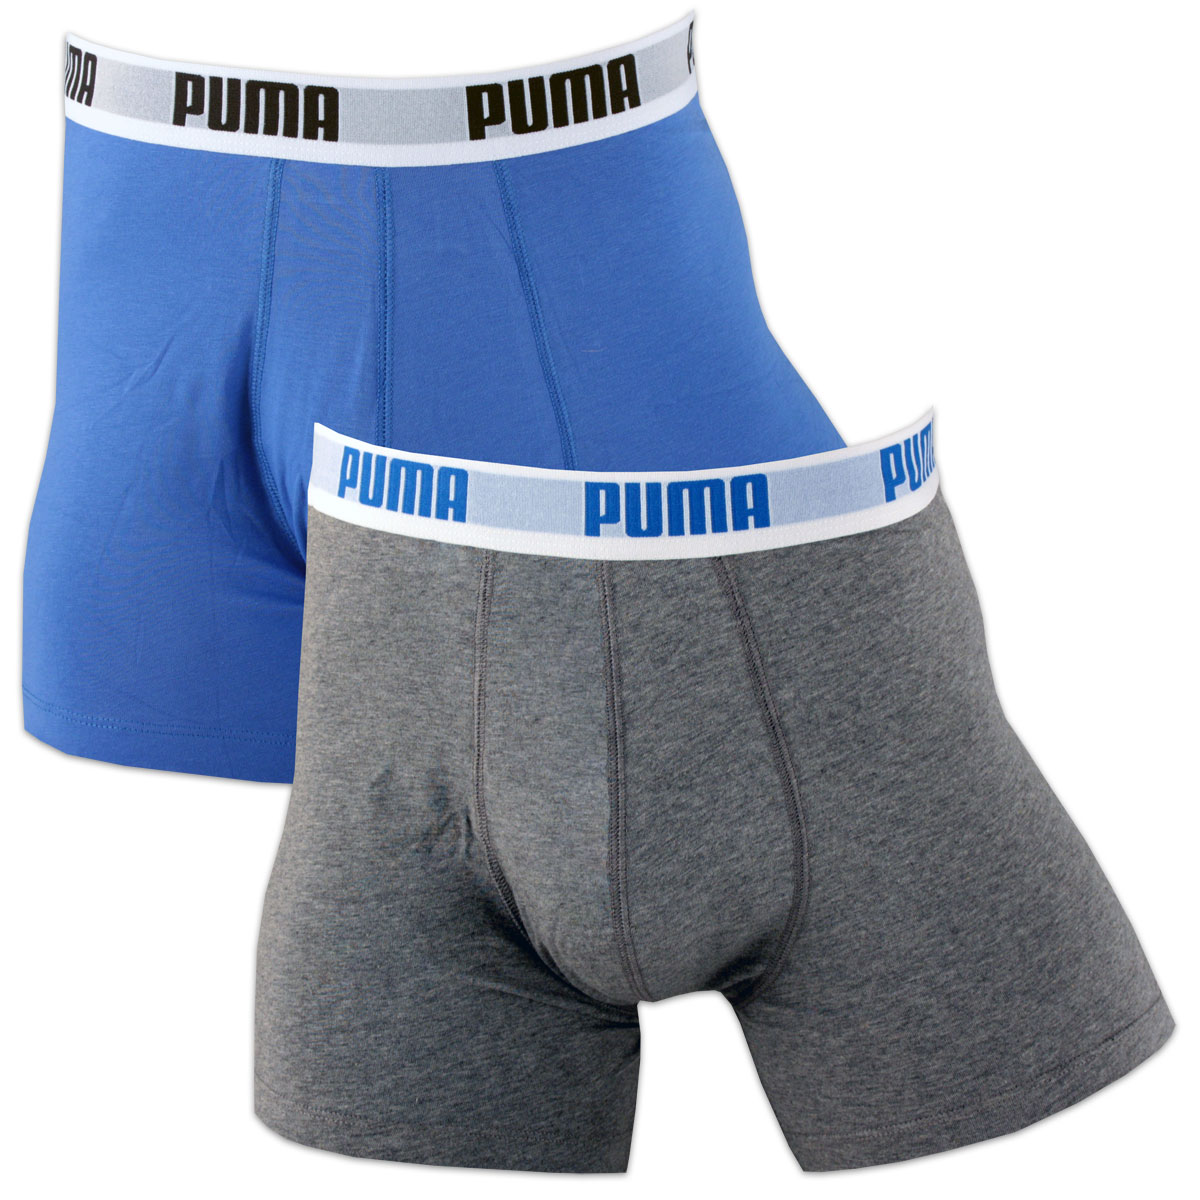 Puma - Basic Boxershorts 2 Pack - Blue/ Grey - Sportus - Where sport ...